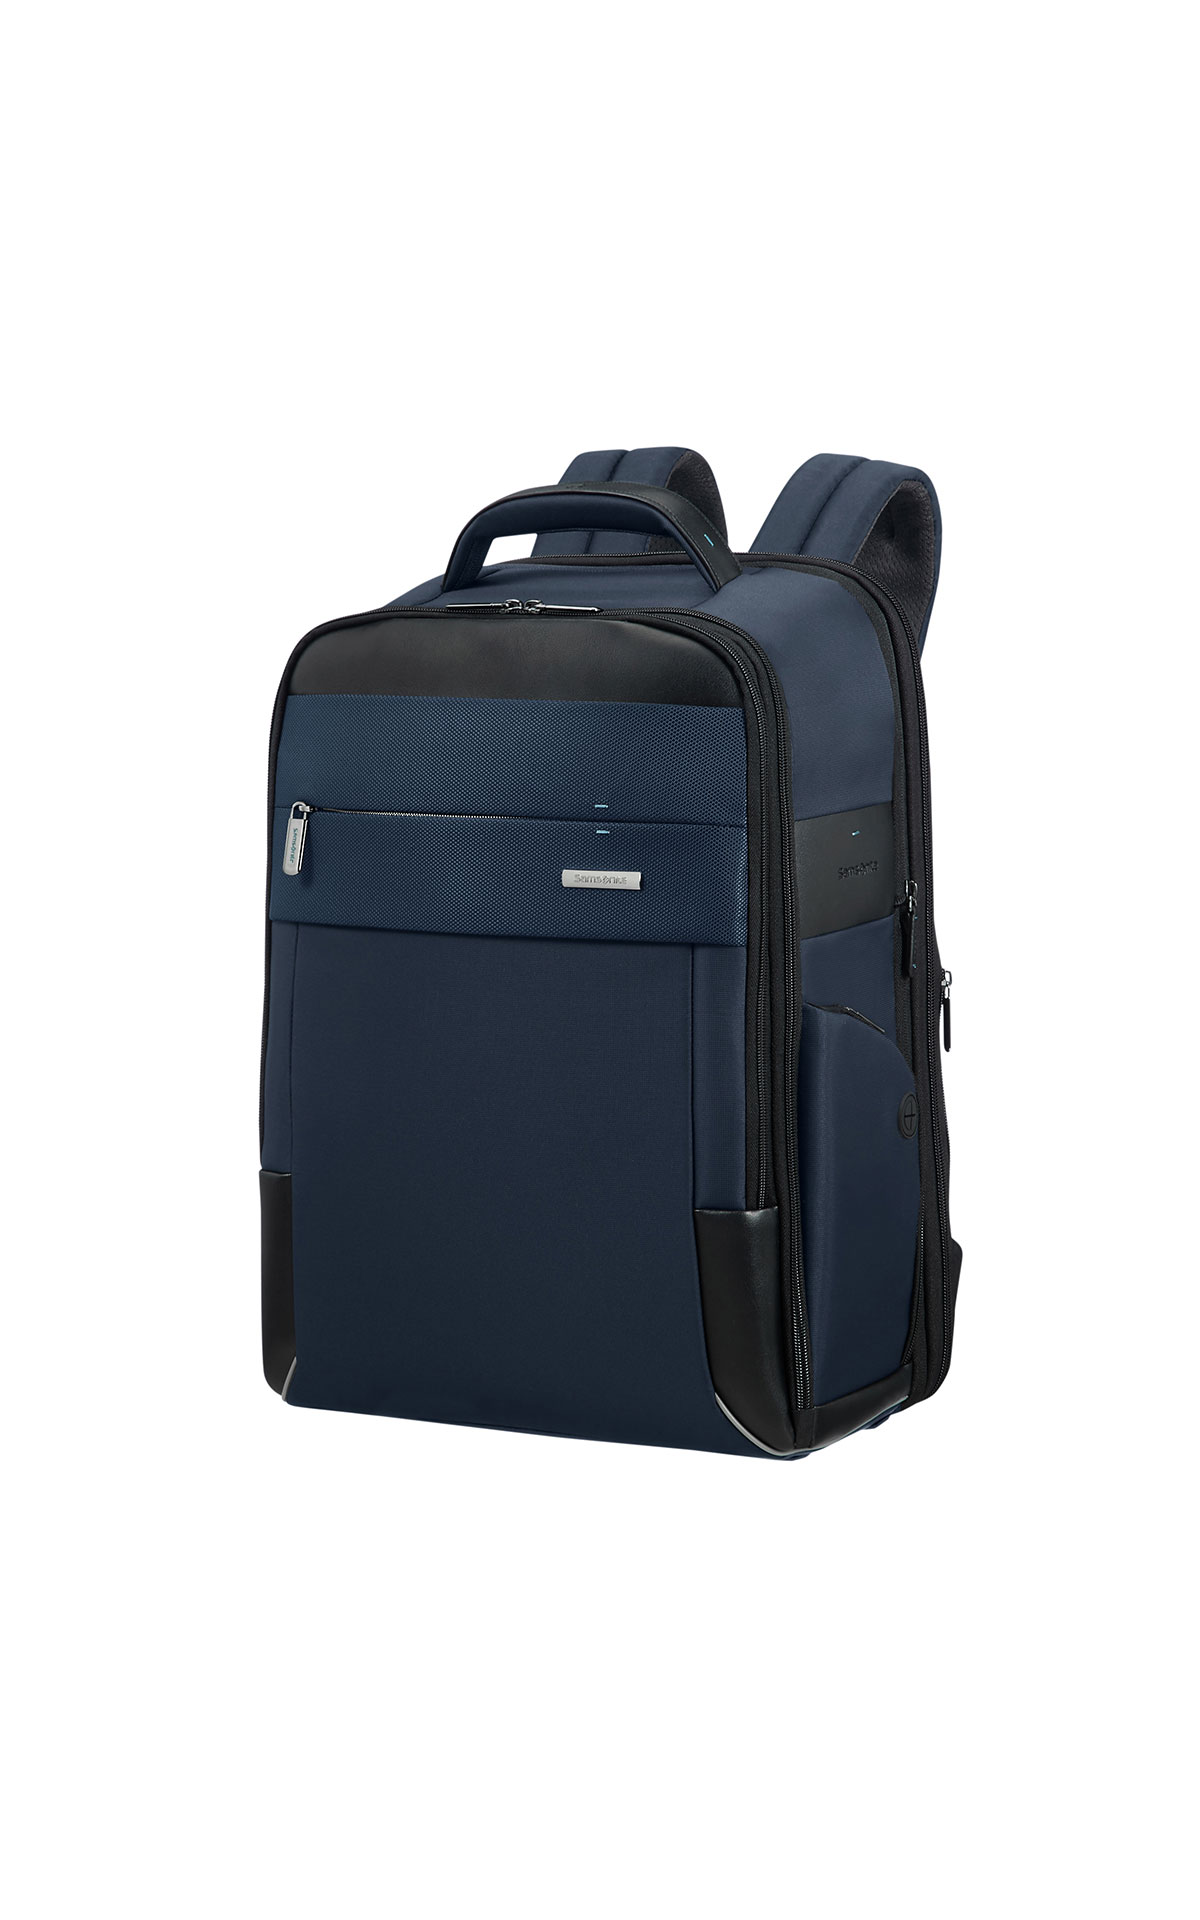 Samsonite Spectrolite 2.0 laptop backpack 17.3 inch EXP from Bicester Village